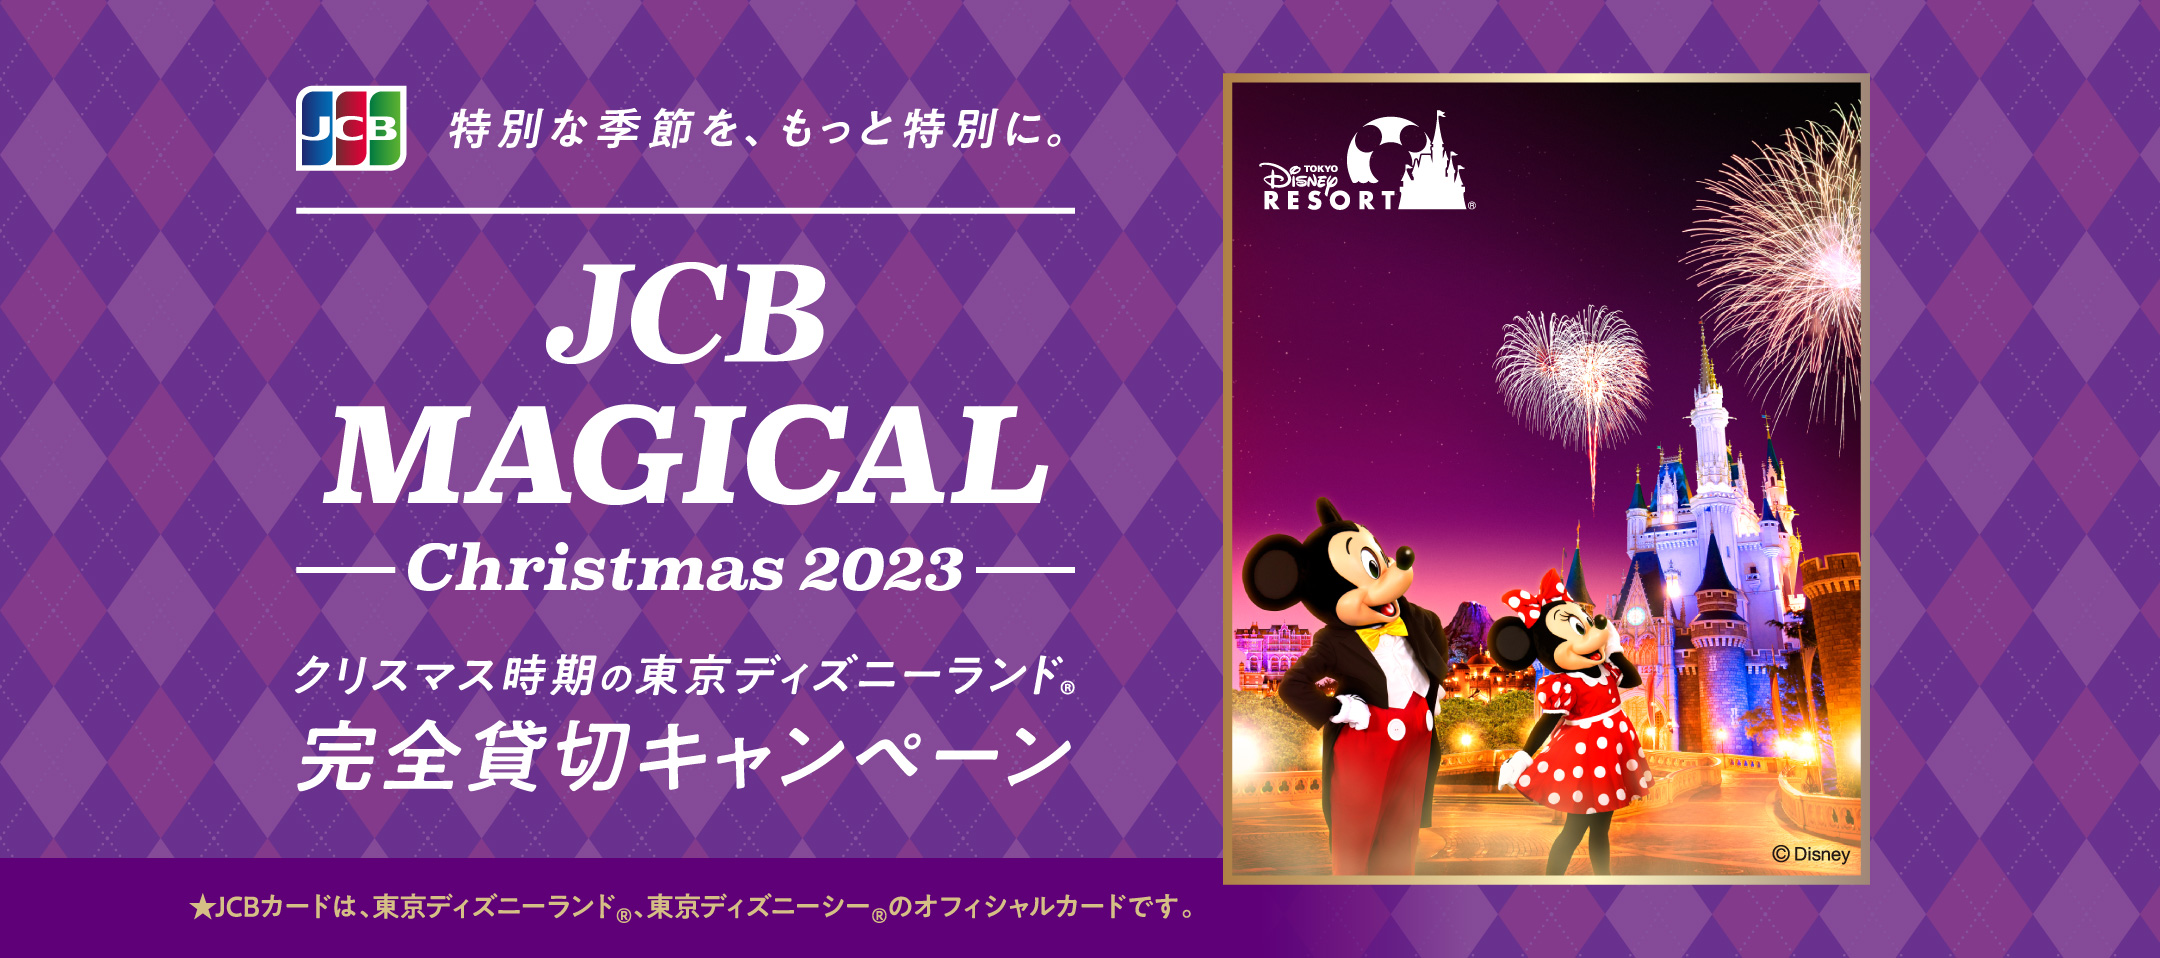 JCB presents 特別な季節を、もっと特別に。JCB MAGICAL Christmas 2023 東京ディズニーランド 完全貸切キャンペーン